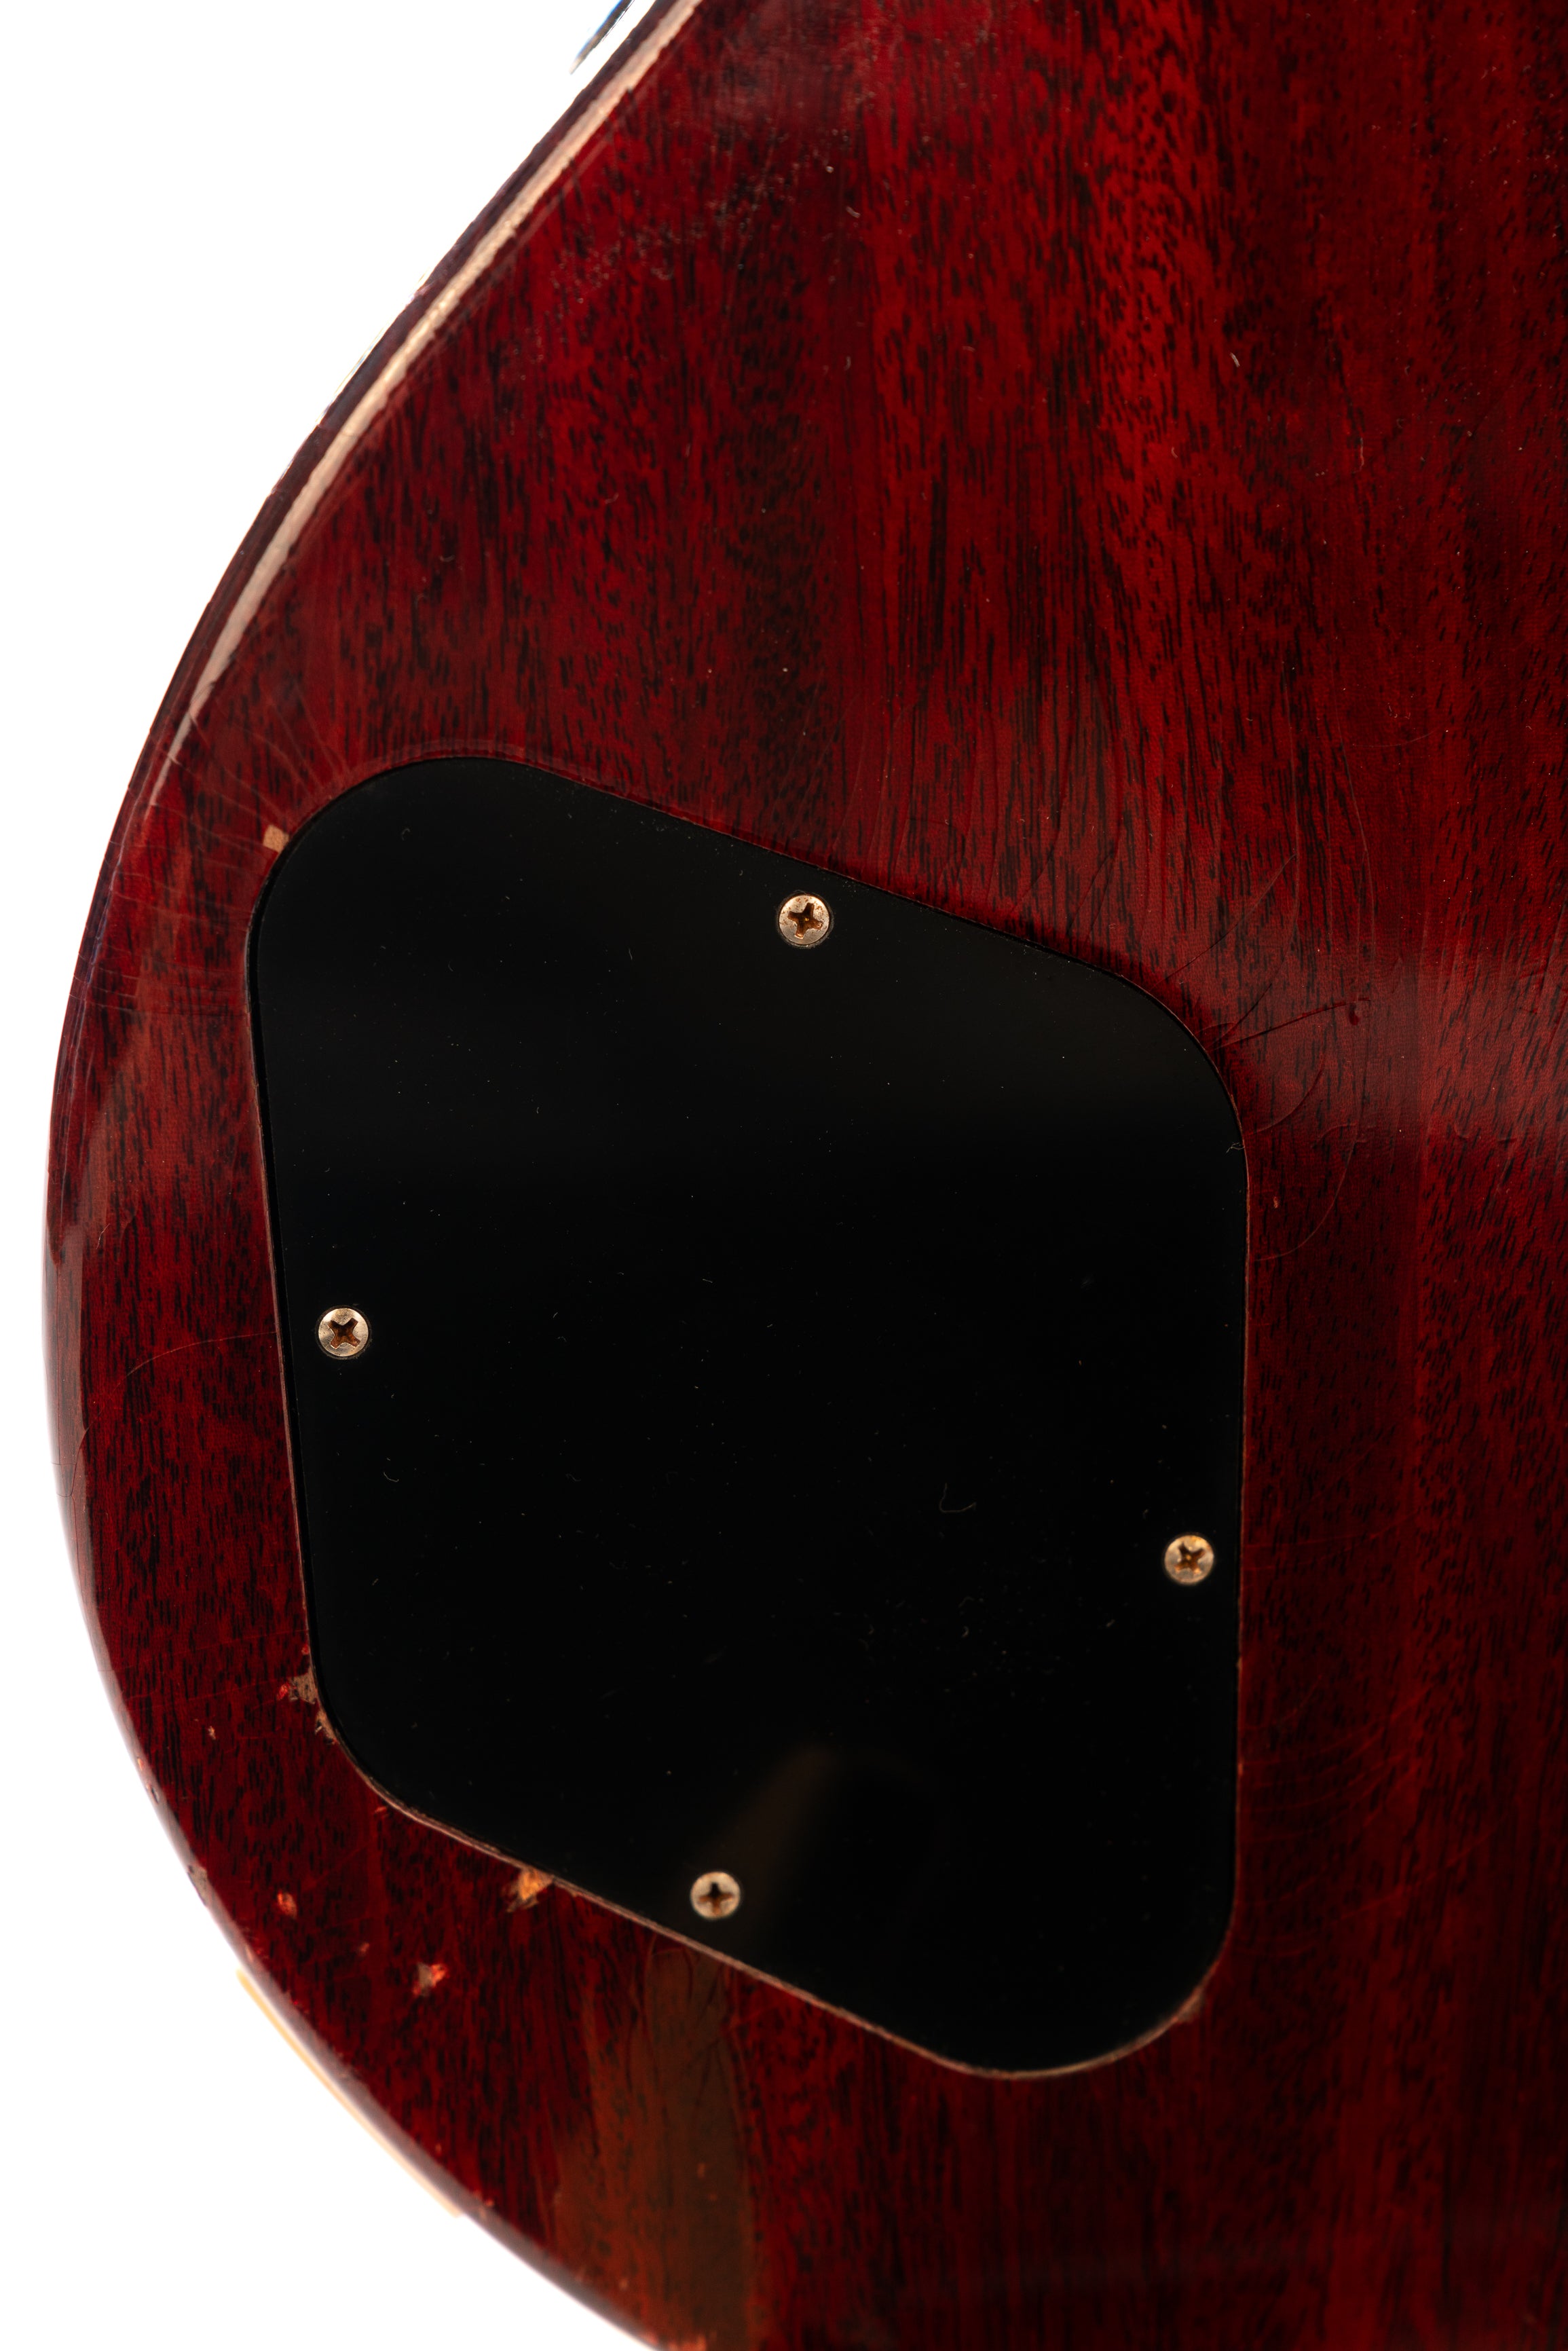 2020 Gibson CS Les Paul R9 in Cherry Tea Burst by Murphy Labs.